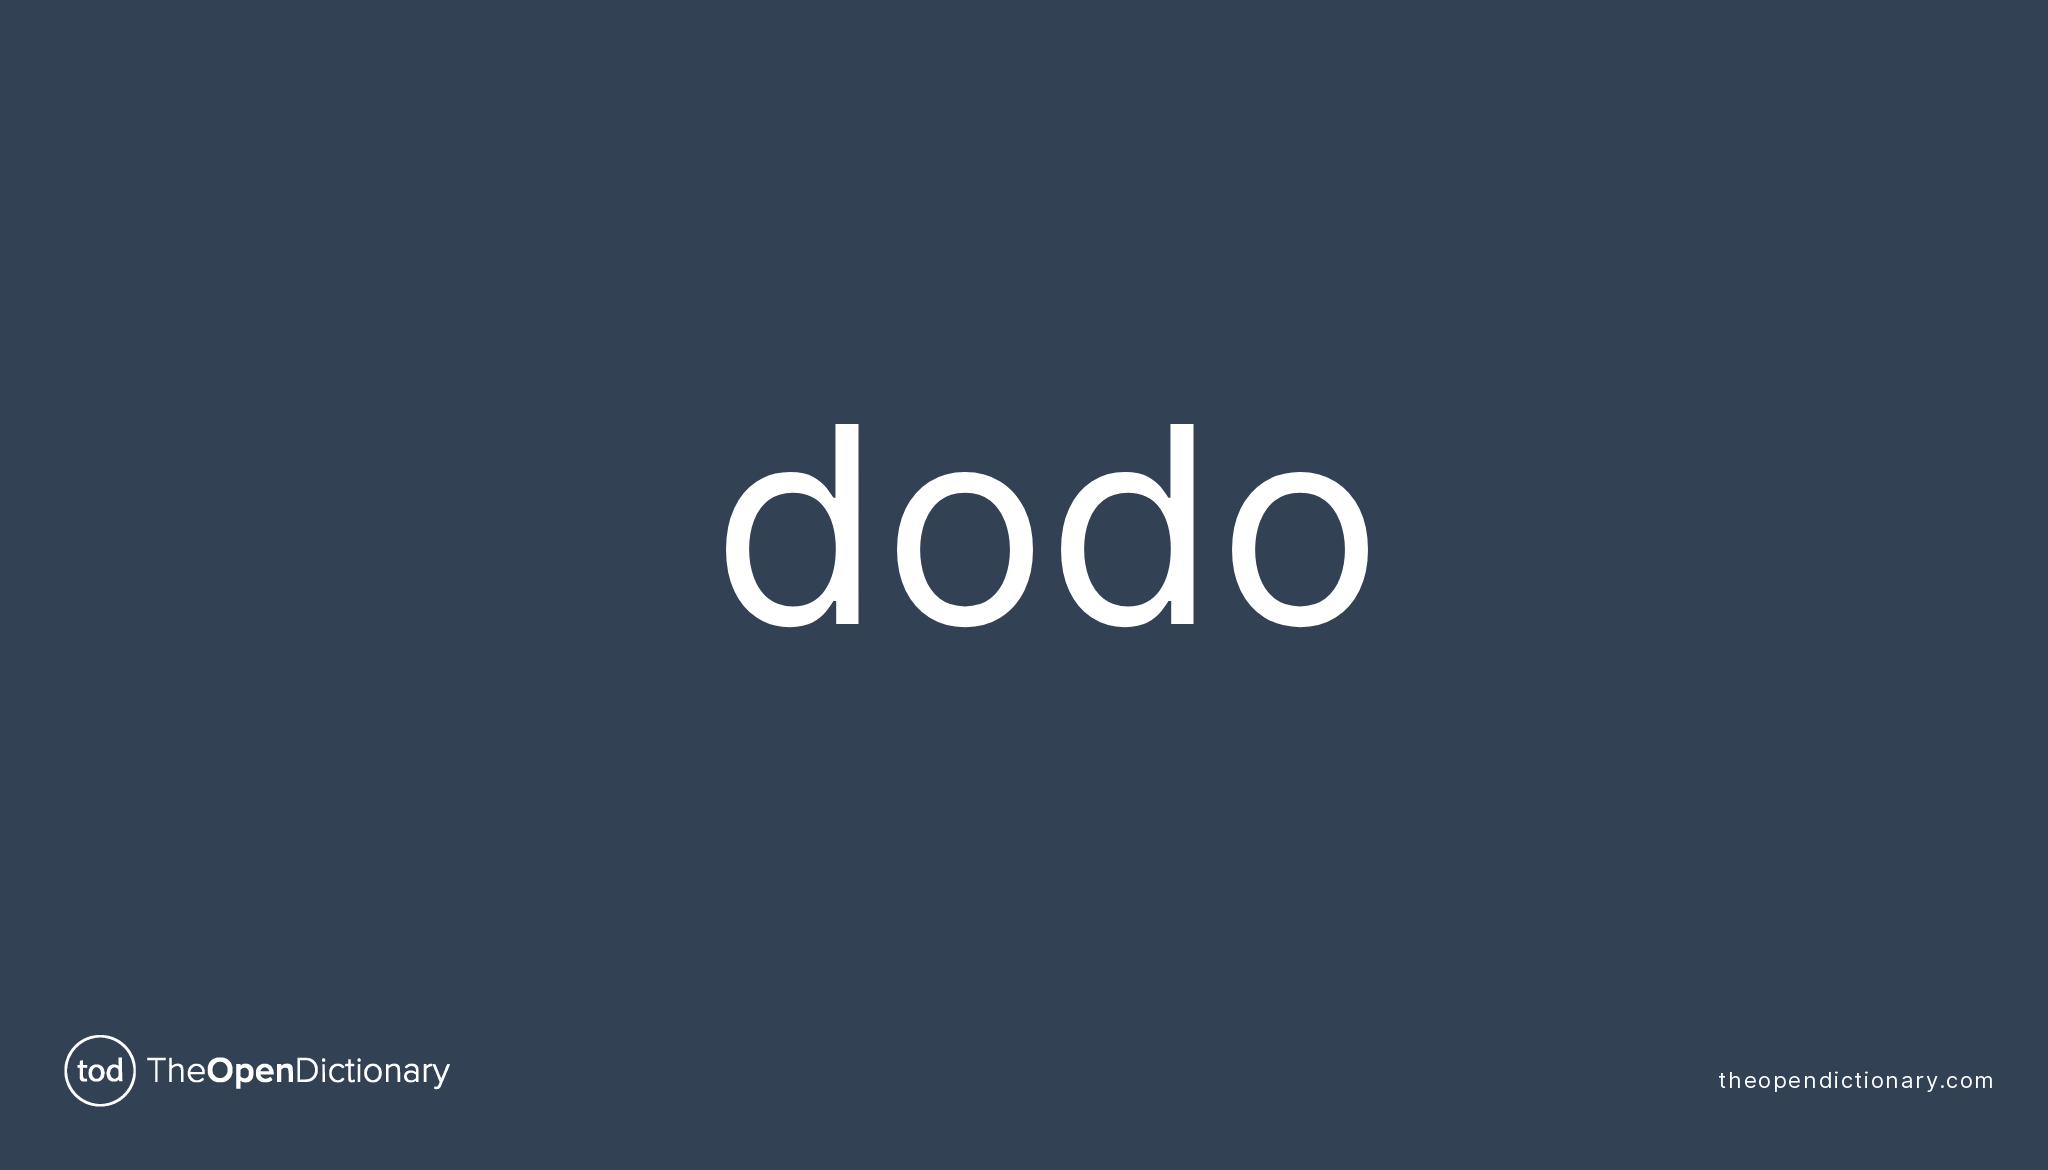 go dodo meaning